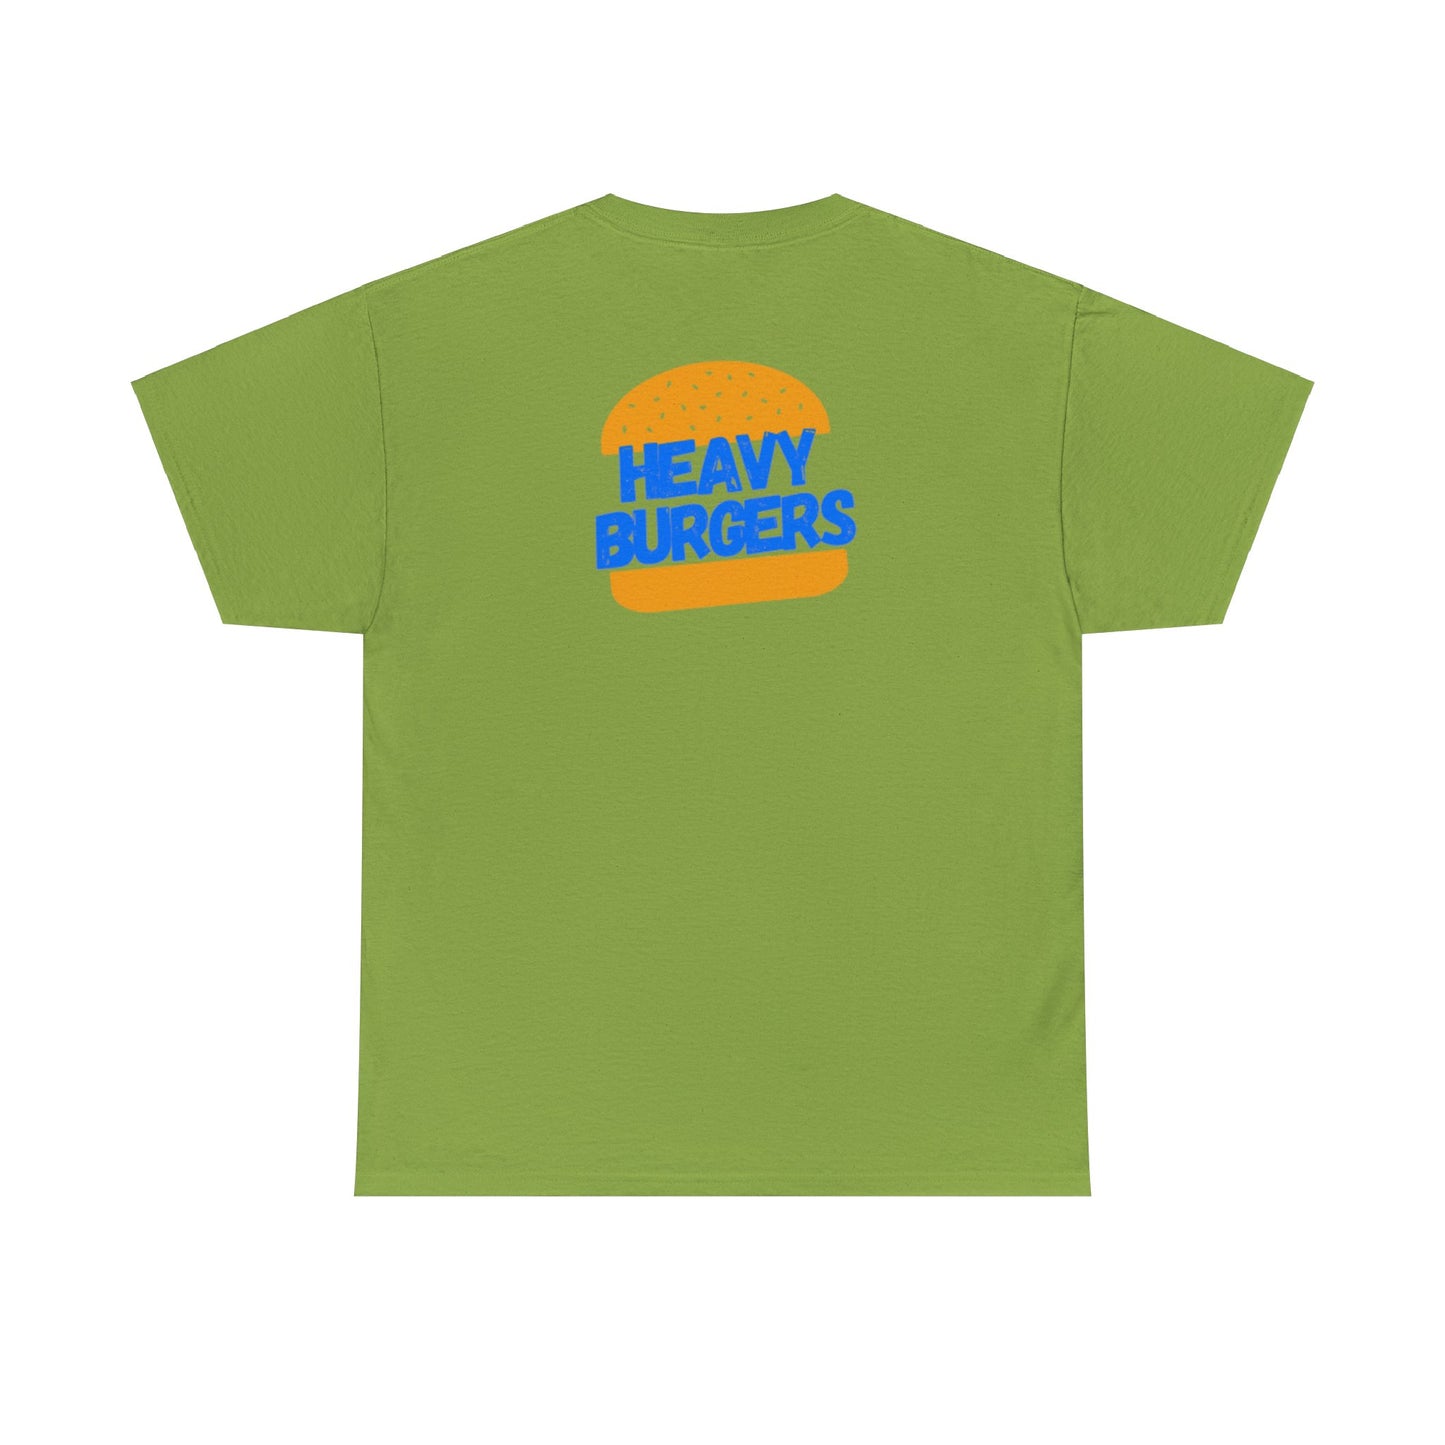 Burger Me, I'm Irish! Unisex T-Shirt.